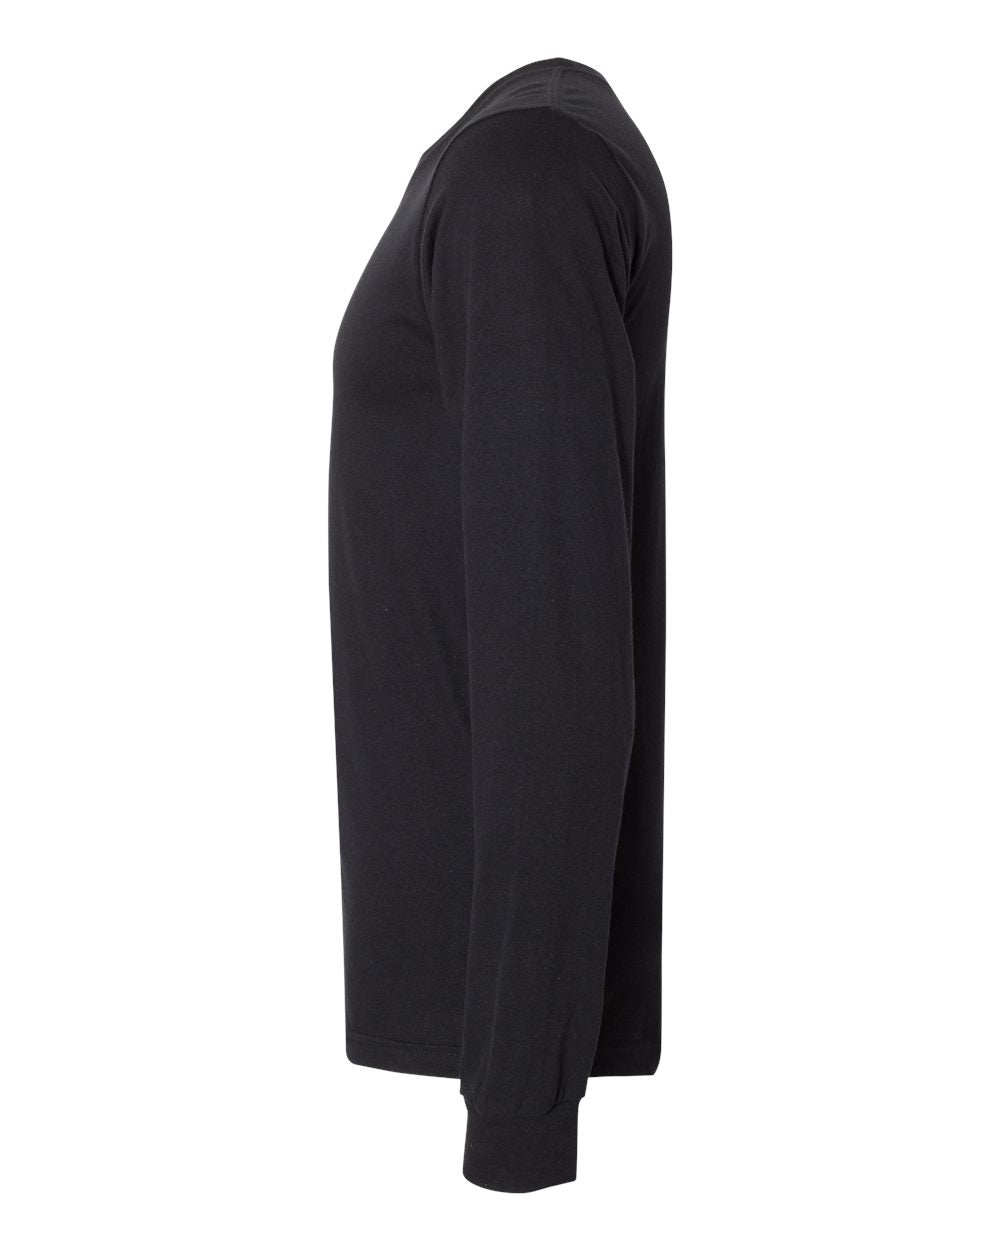 American Apparel Fine Jersey Long Sleeve Tee 2007 #color_Black